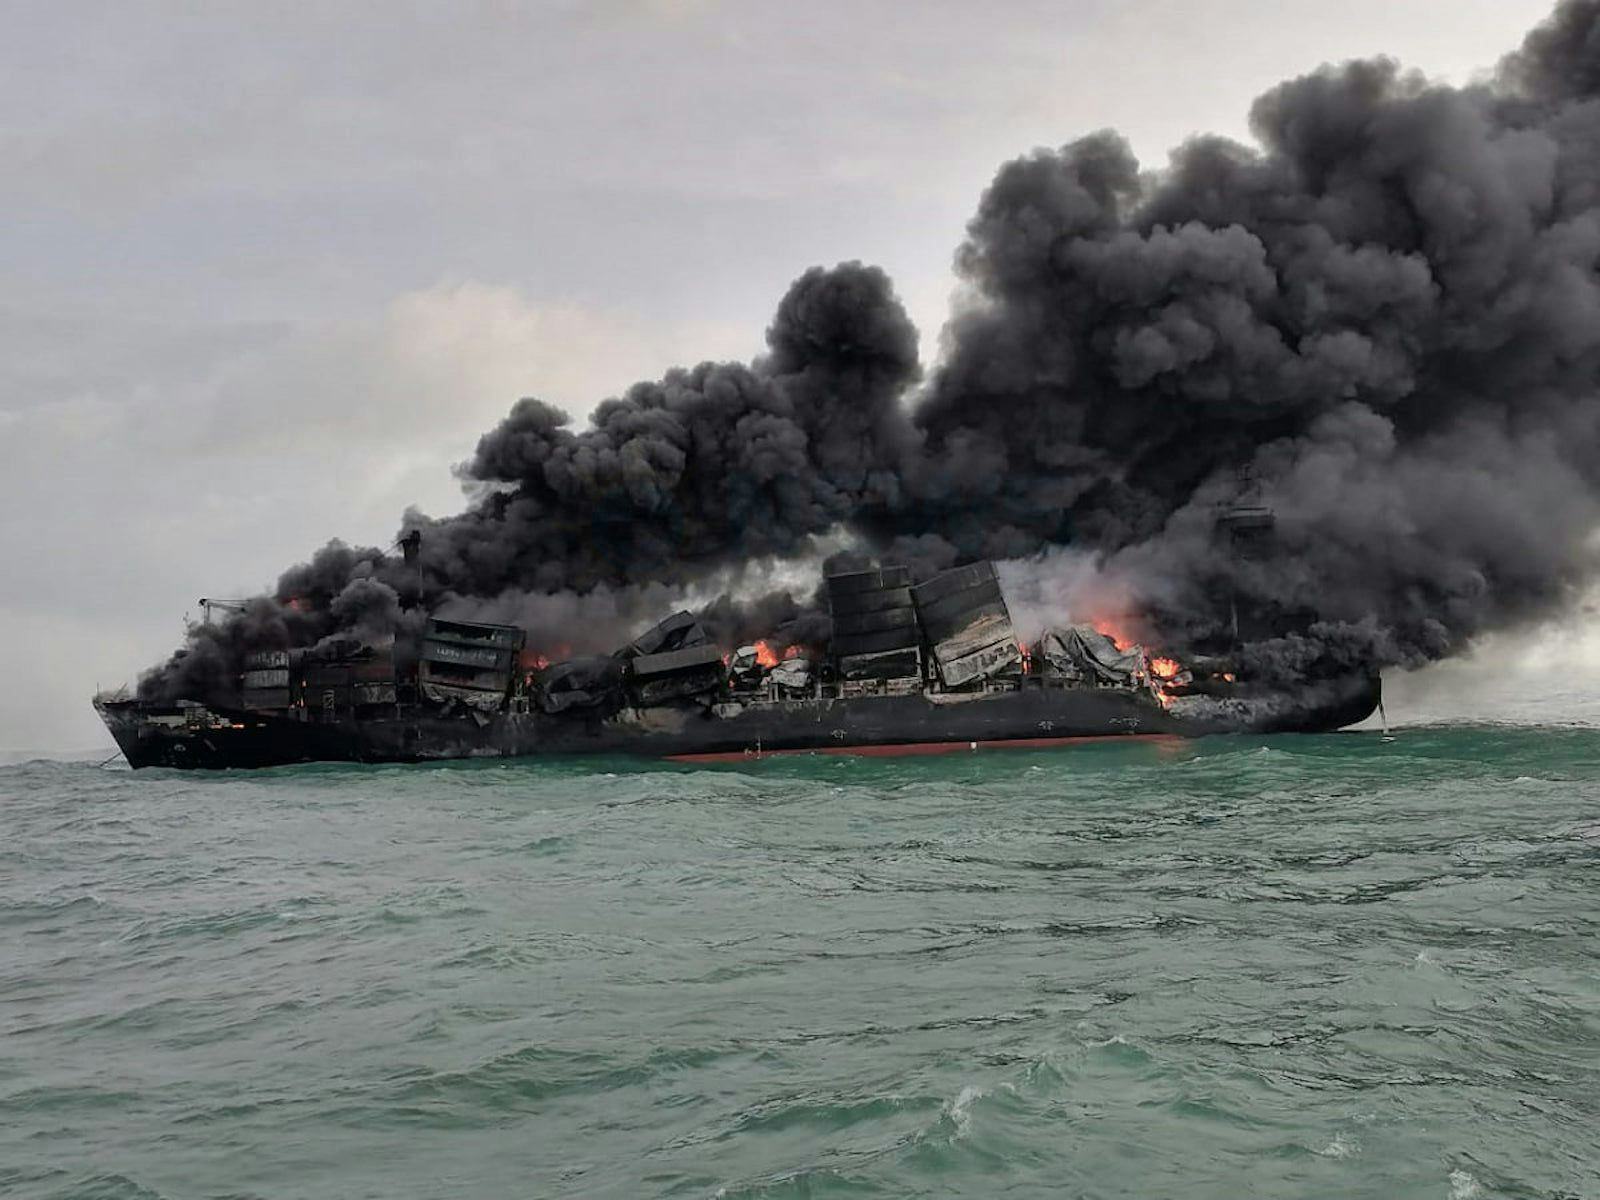 MV X-Press Pearl maritime disaster: Has SL done enough multi-sectoral damage control? 